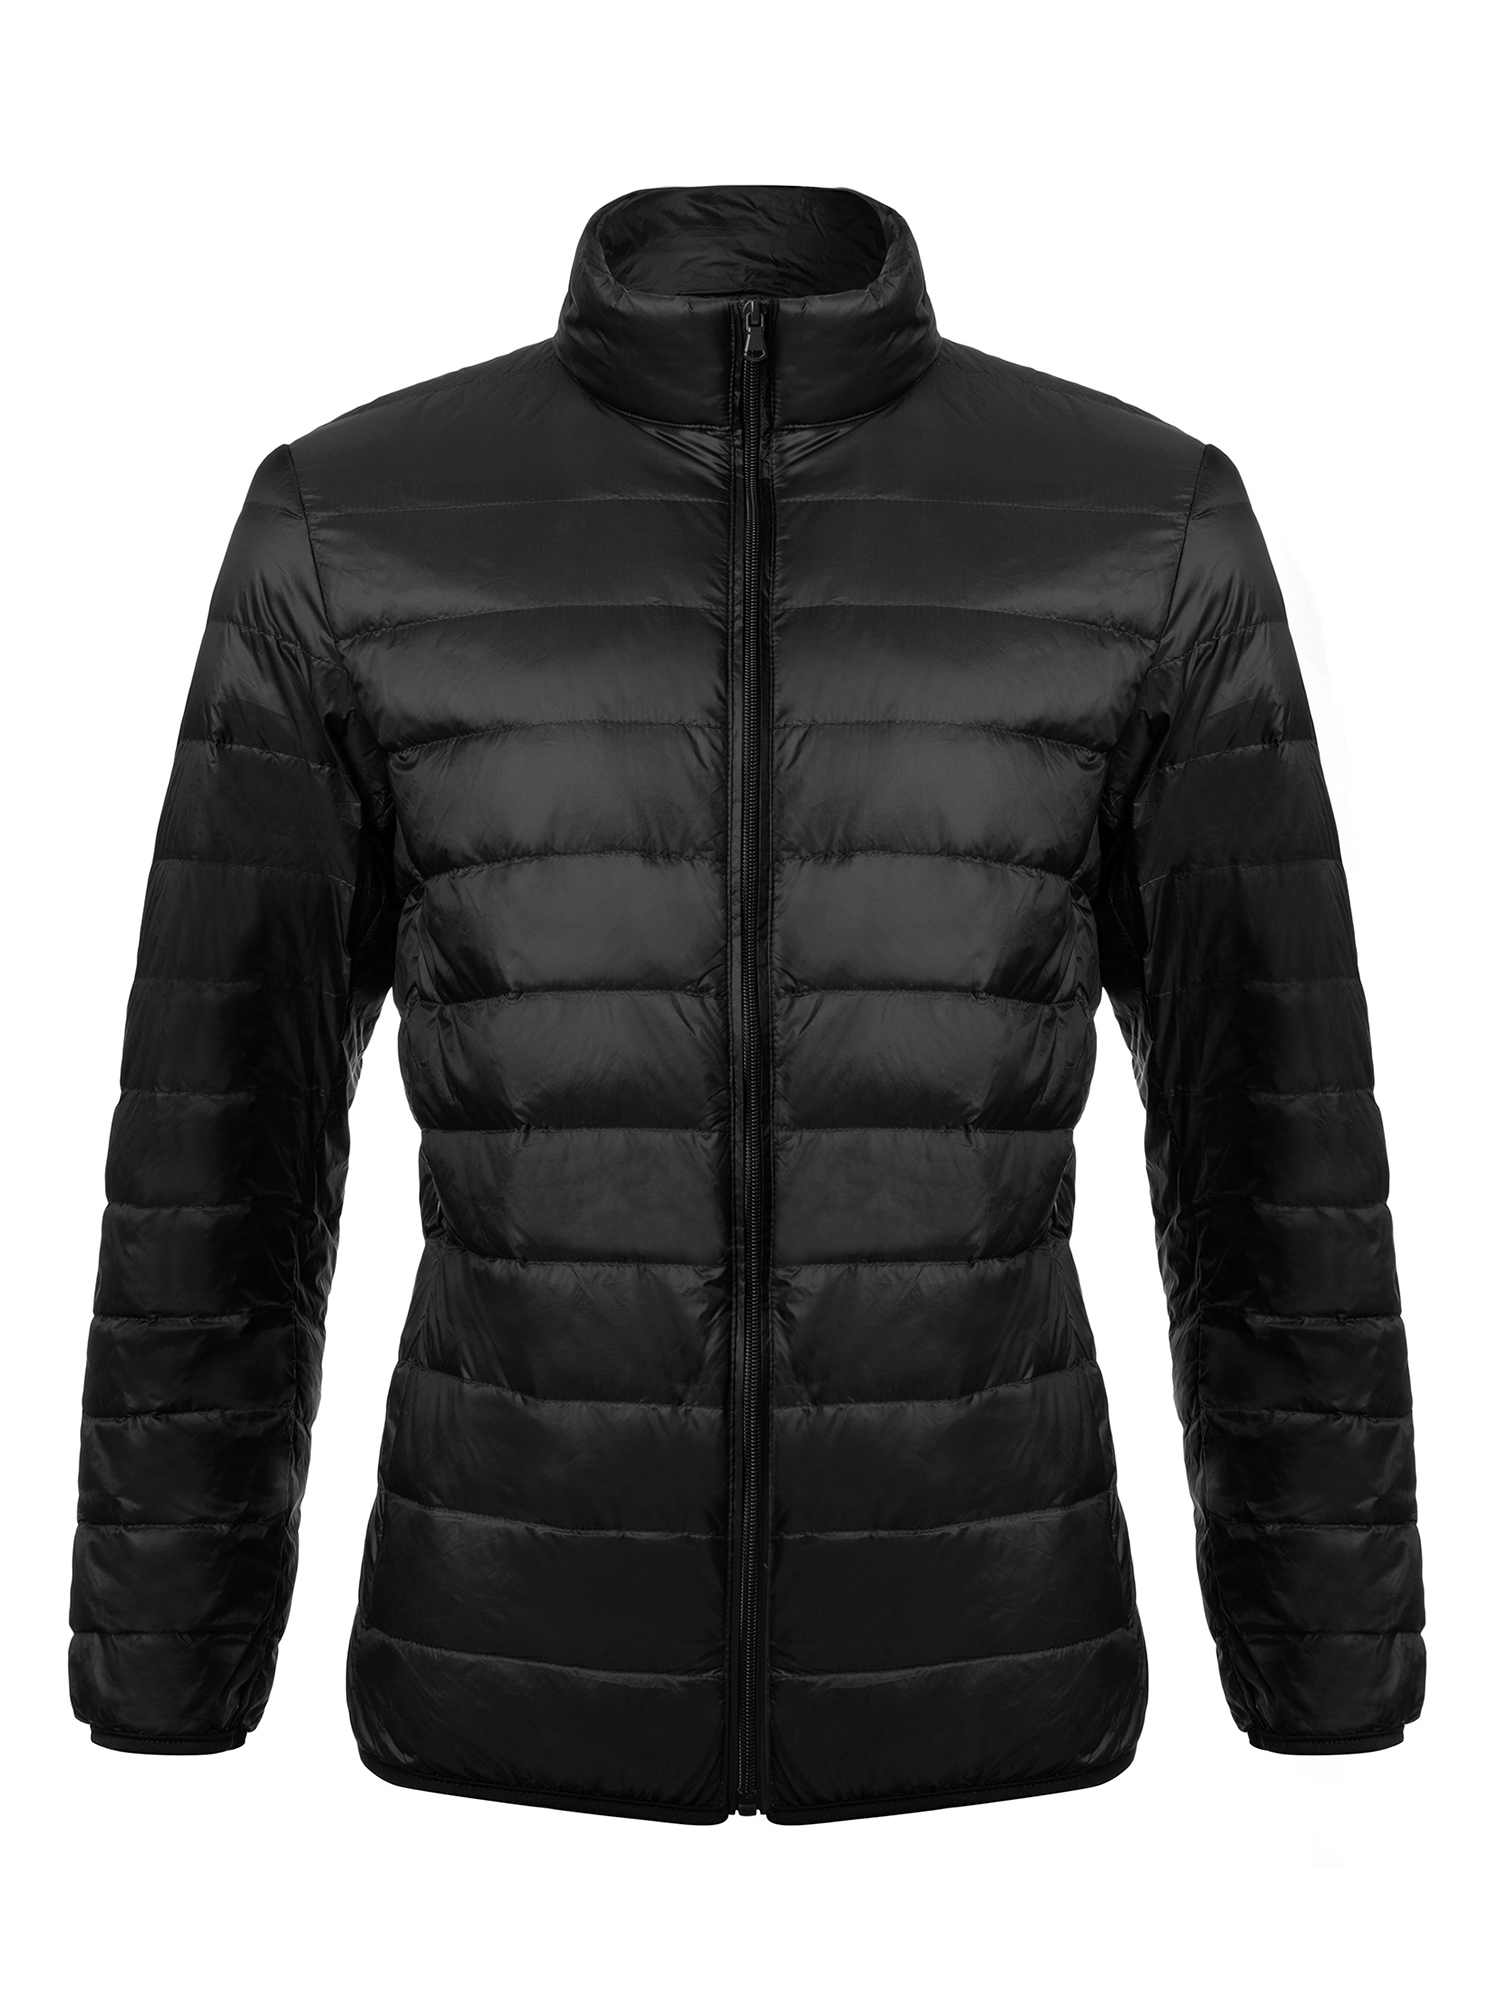 Mens Packable Down Puffer Jacket Lightweight, Water-Resistent Zipper Jackets Windproof Winter Insulation Puffer Coat Outdoor,Black S-2XL - image 5 of 8